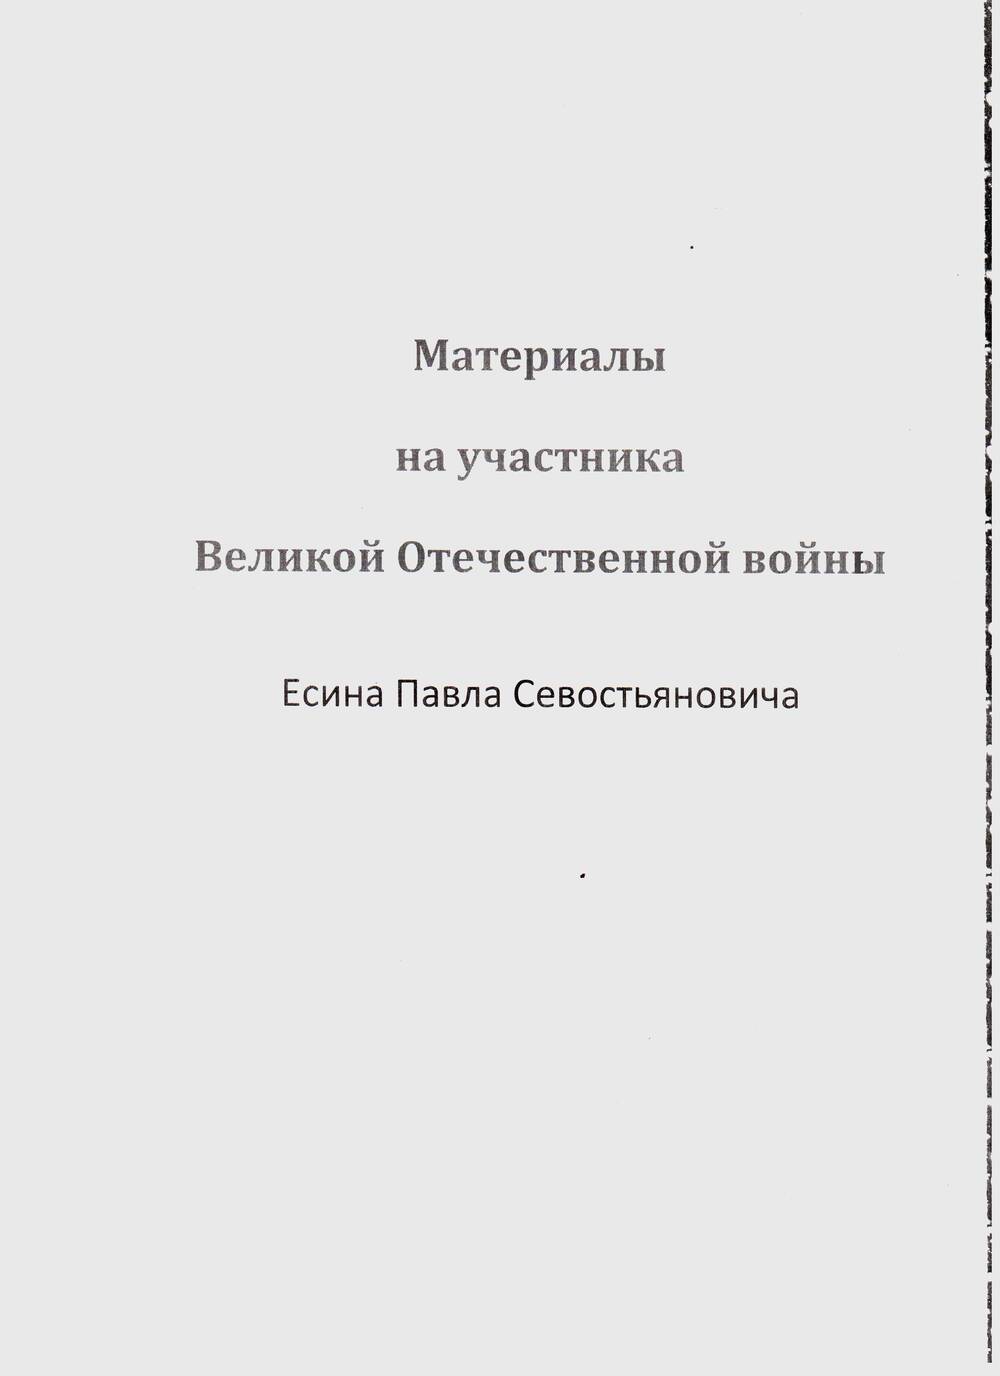 Папка с материалами (копии) Есина Павла Севостьяновича.